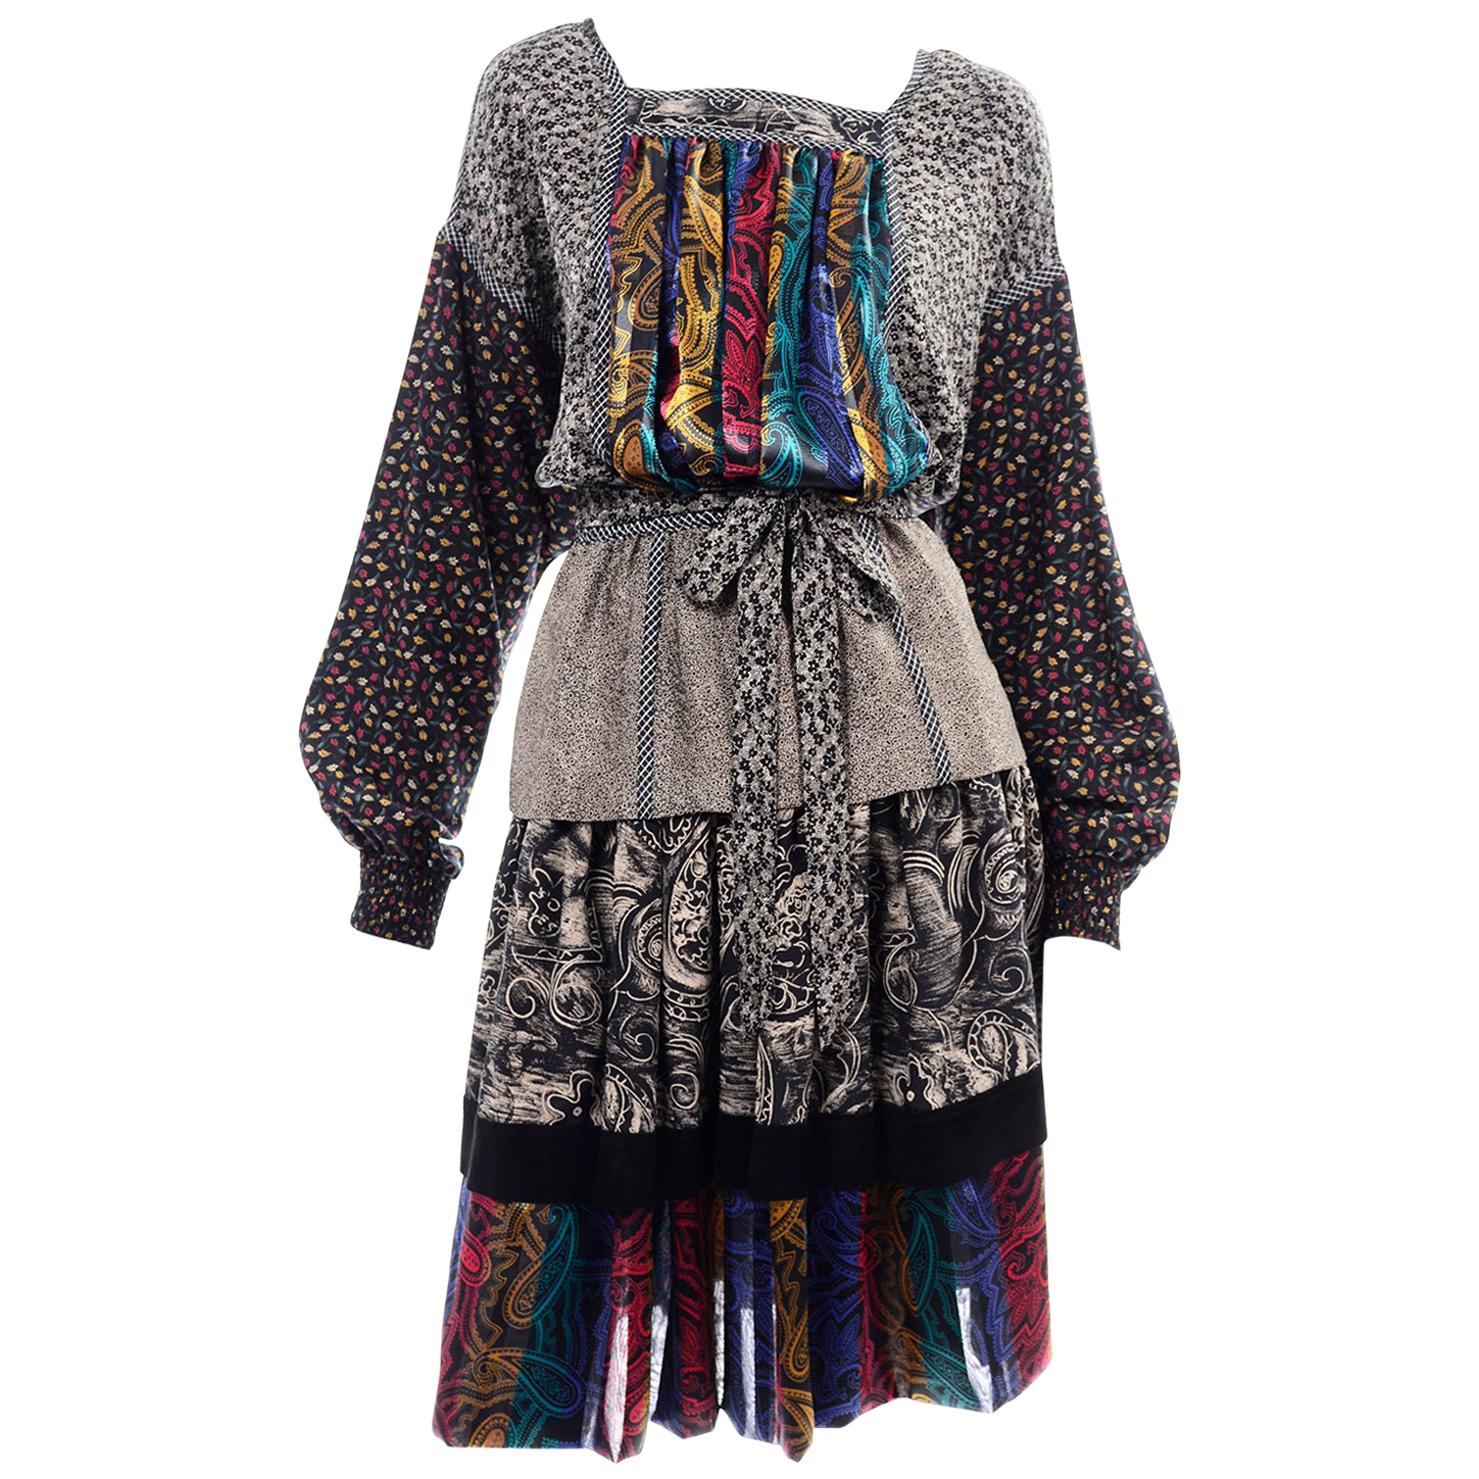 Koos Van den Akker Couture Collage Vintage 2 Piece Dress Abstract Patchwork